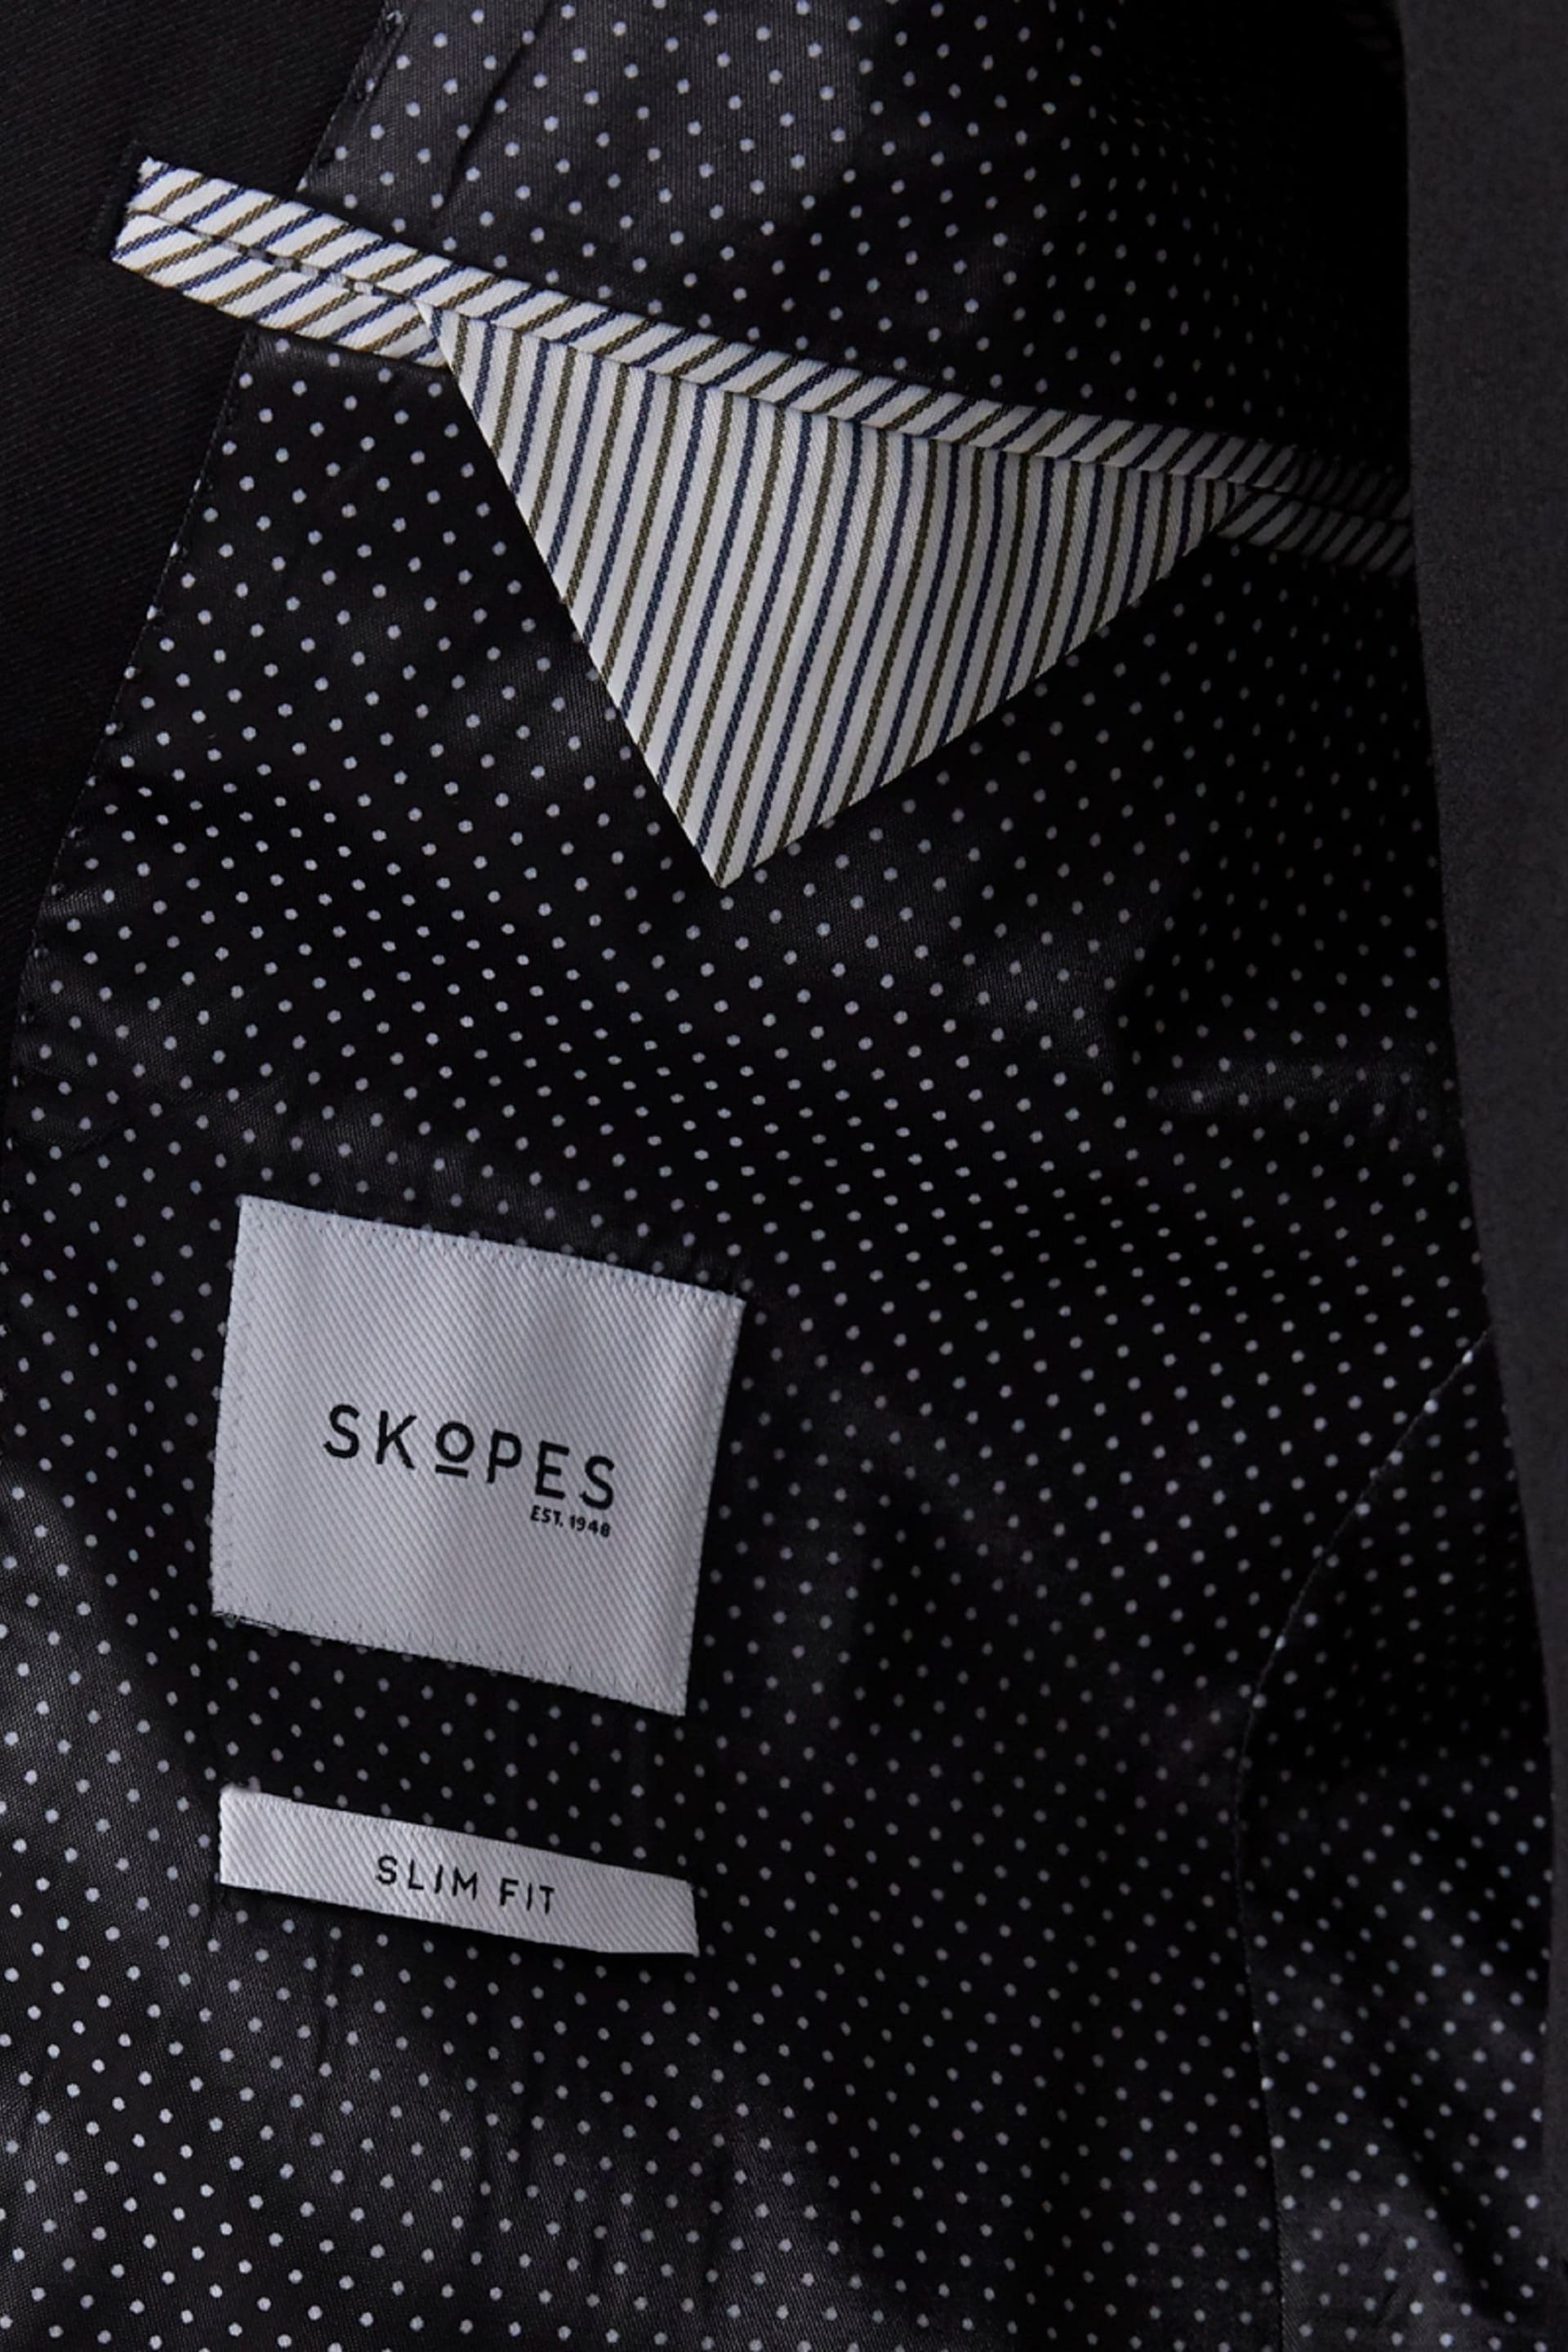 Skopes Milan Black Slim Fit Suit Jacket - Image 6 of 6